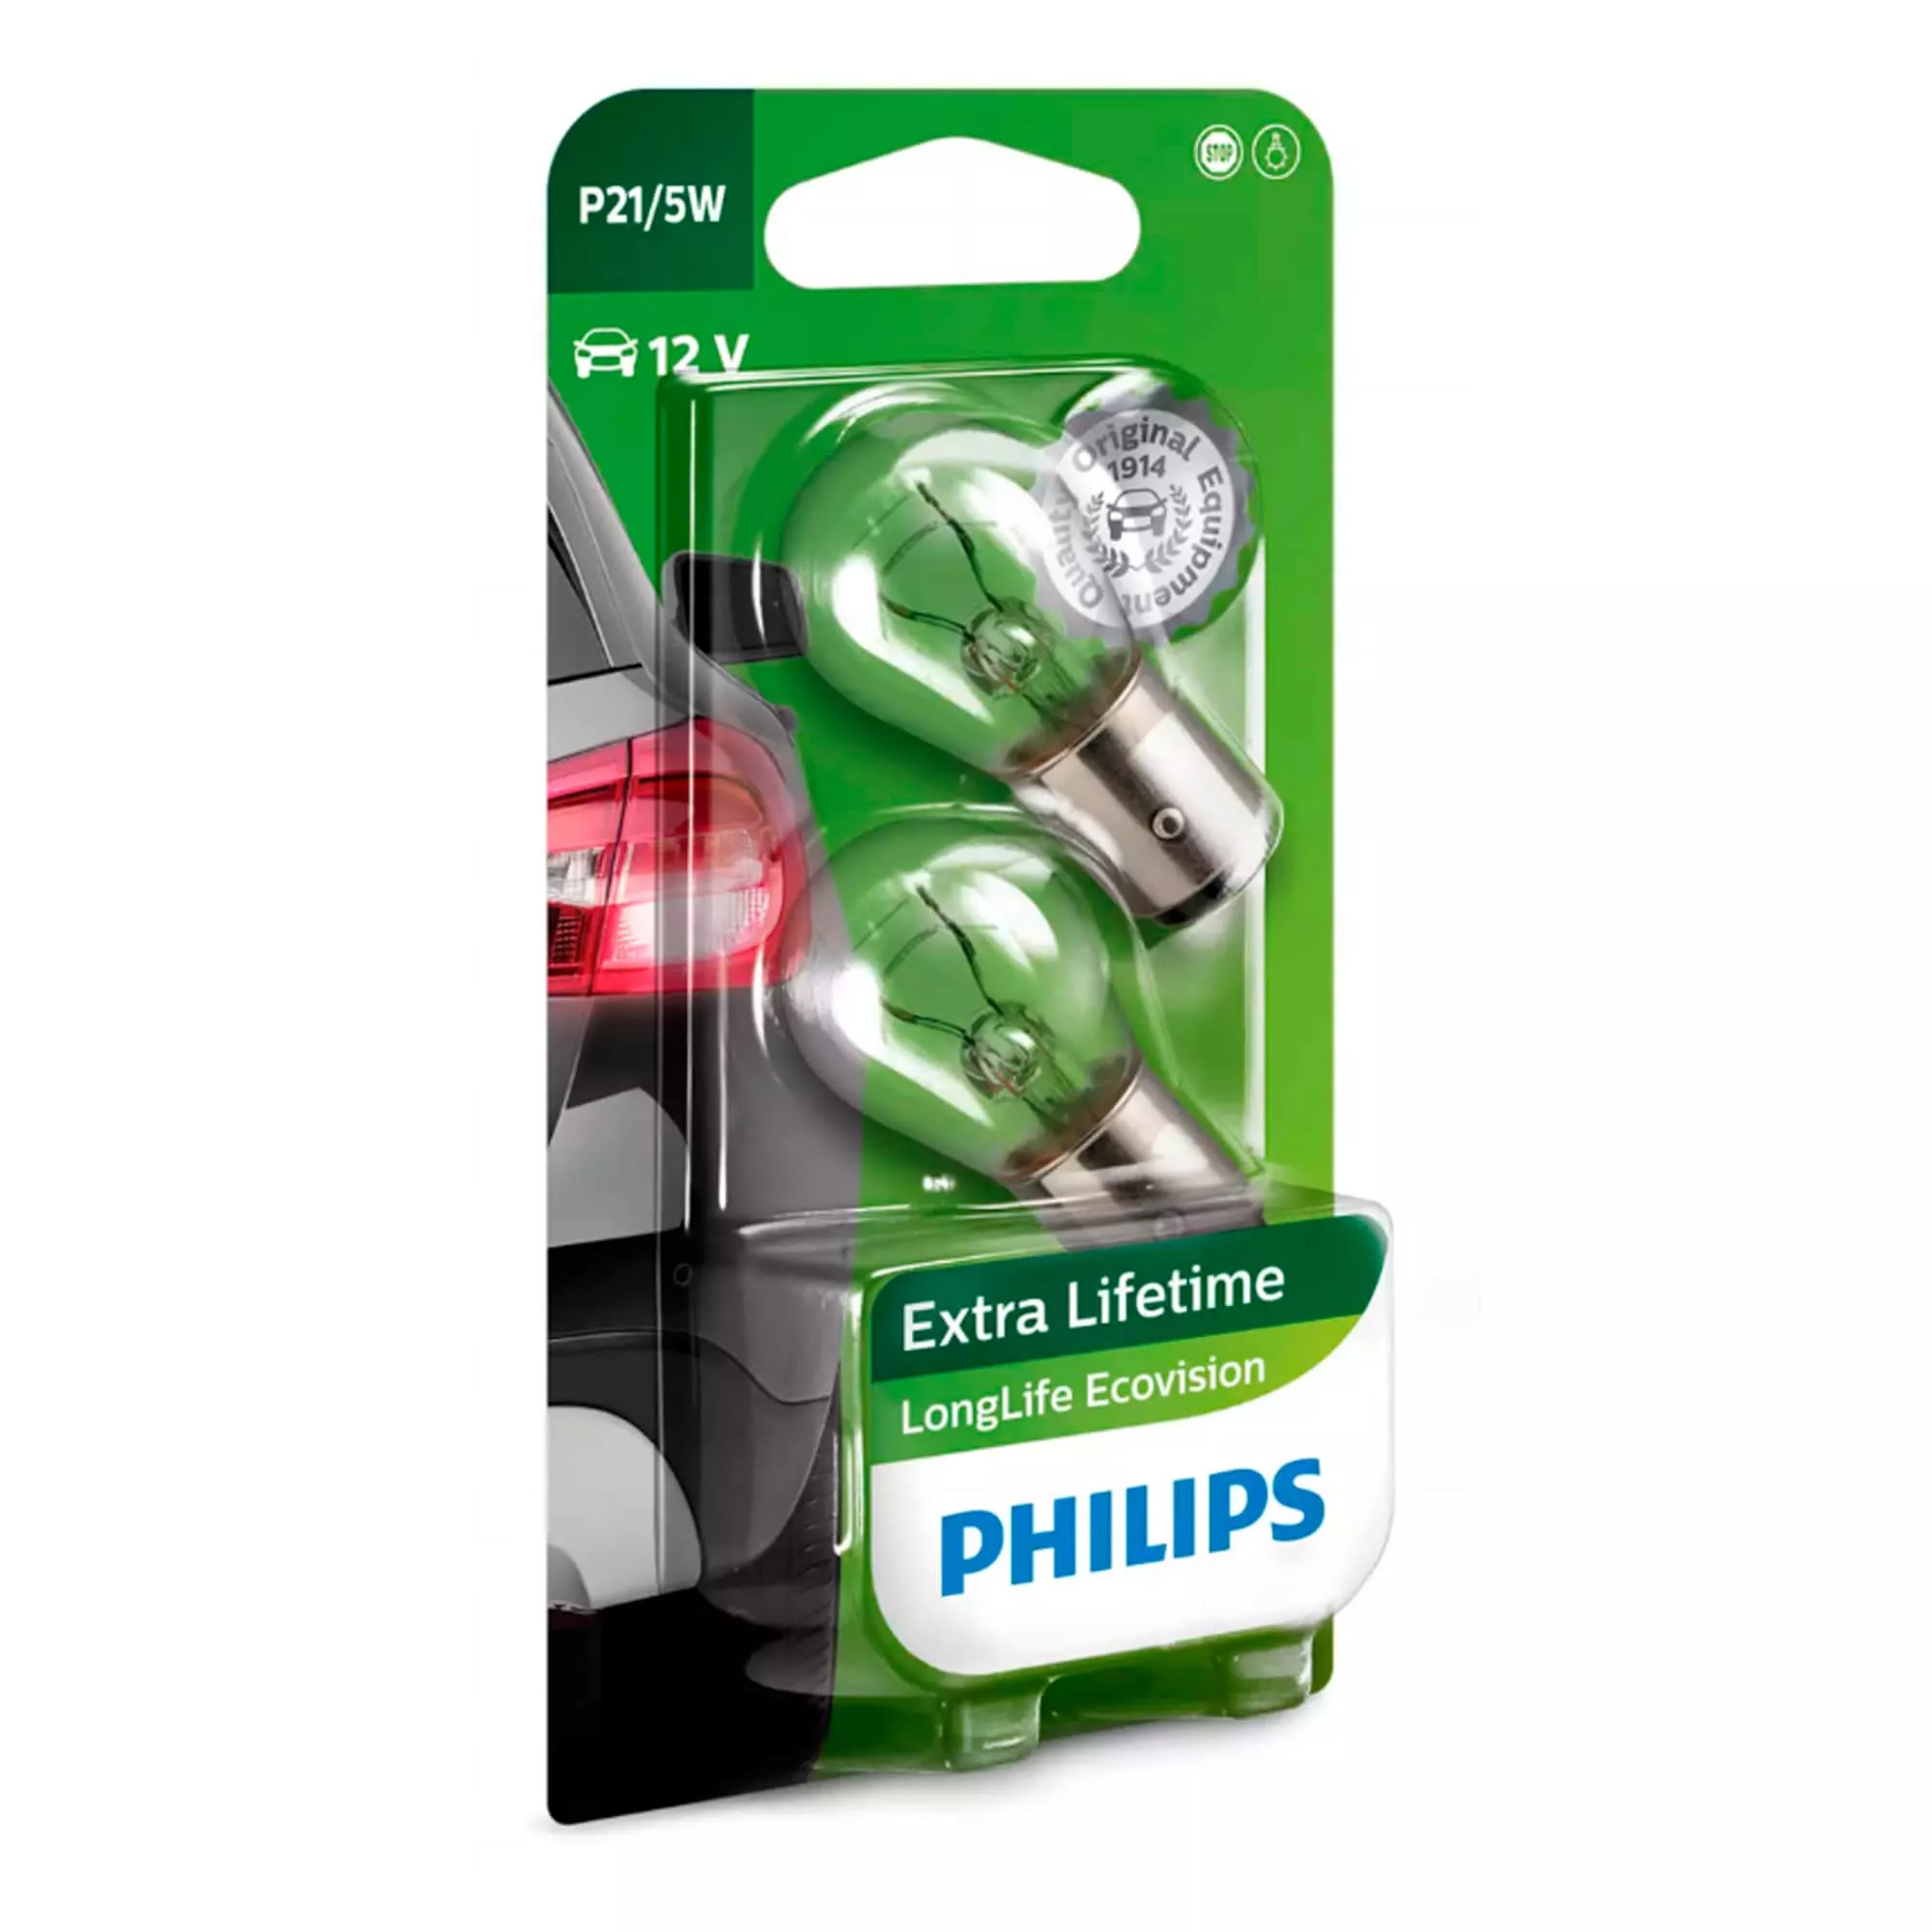 Лампа Philips Extra Lifetime P21/5W 12V 5W 38201328